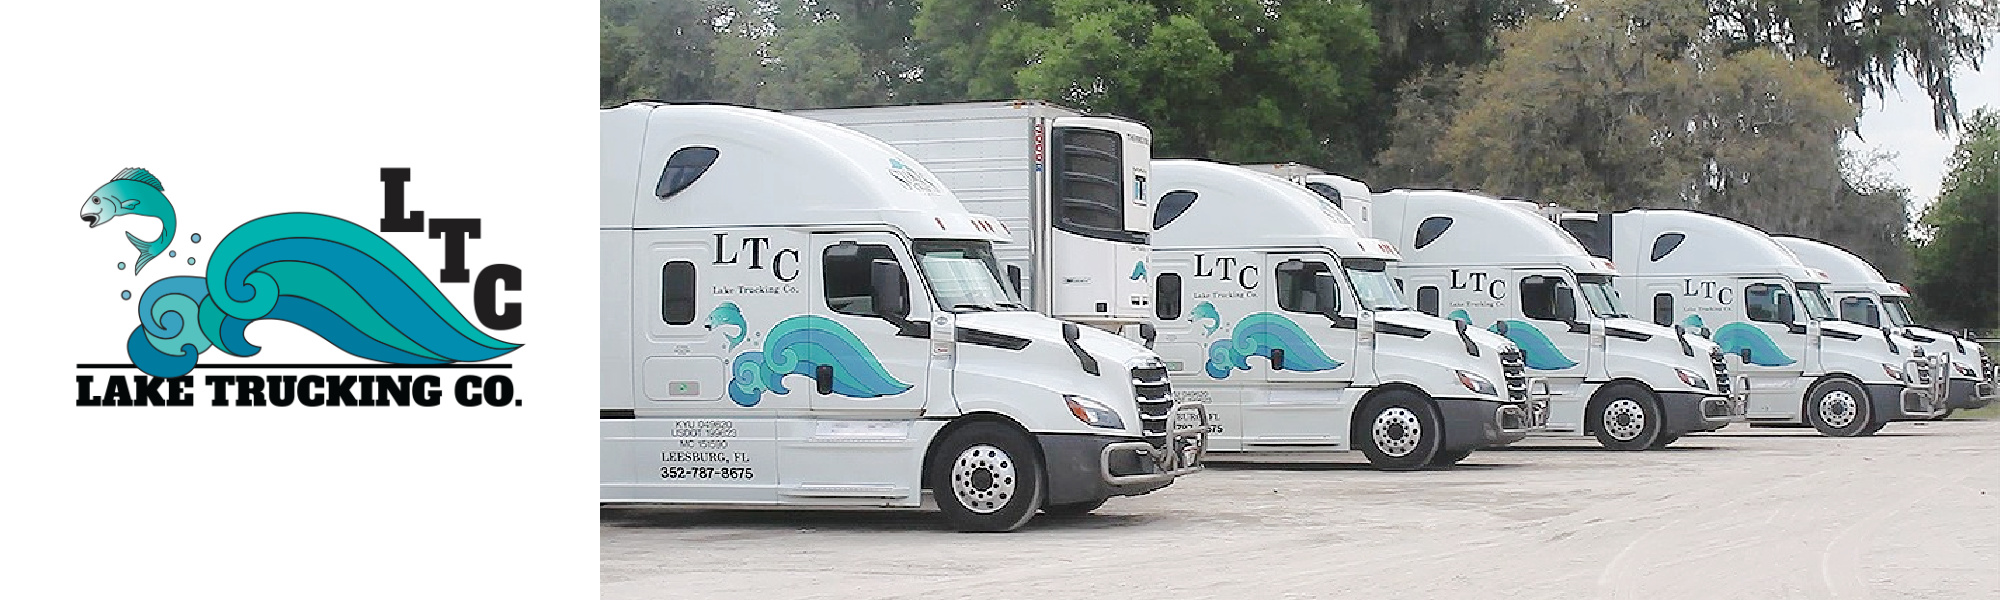 Lake Trucking Company Go Freight Hub Group #gofreight #doxidonut